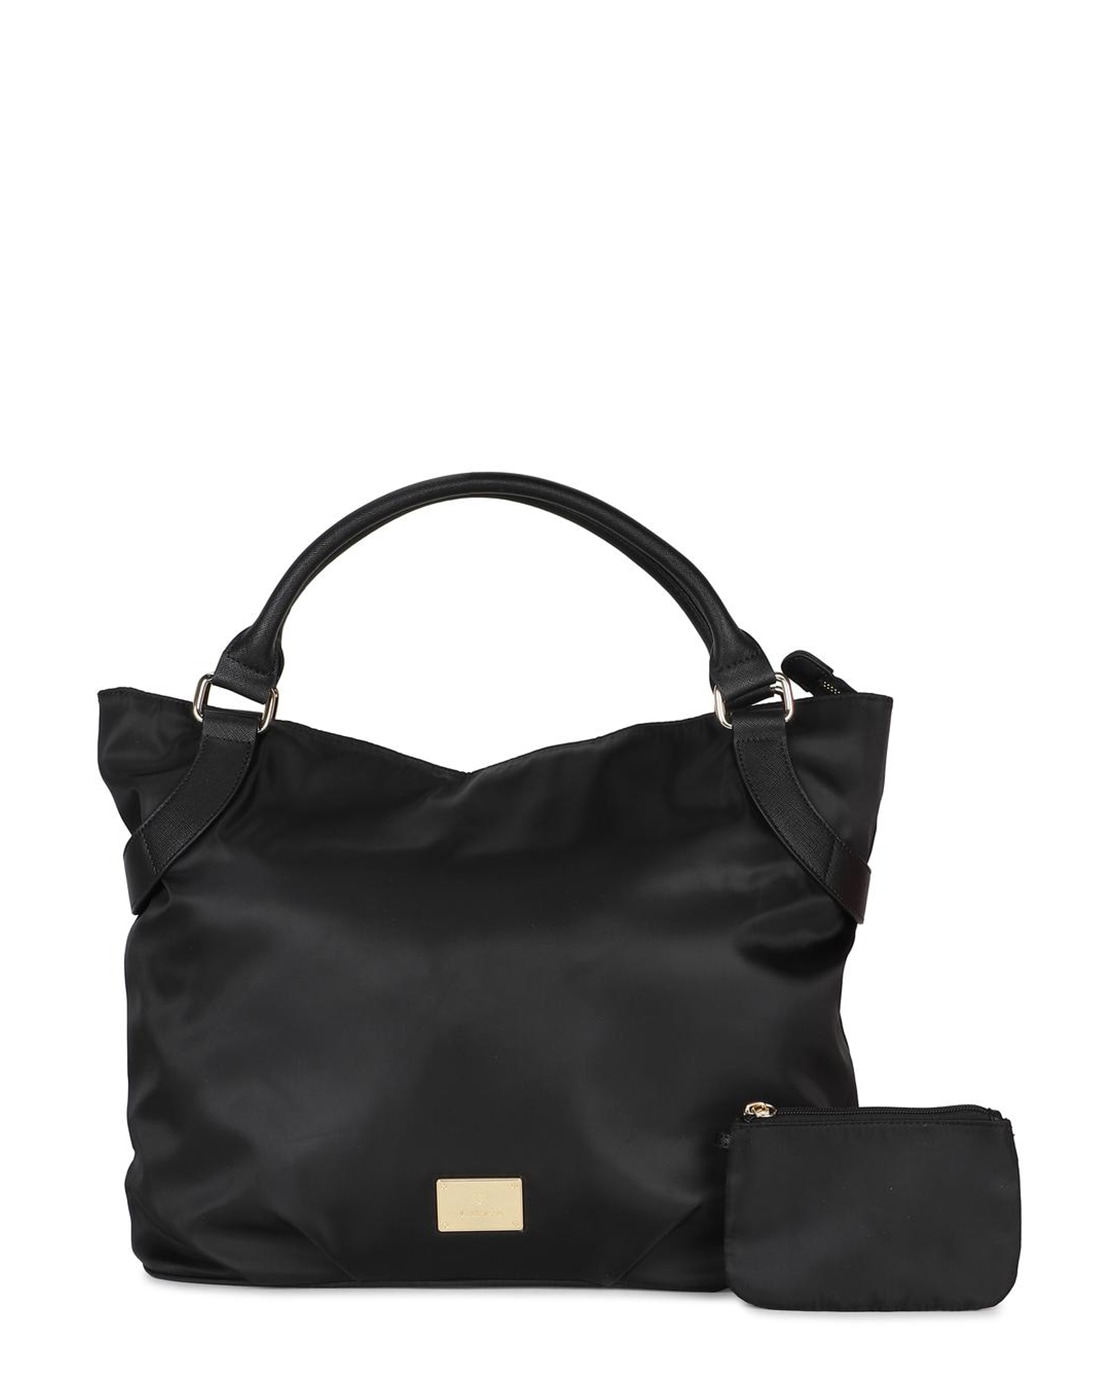 Van Heusen  Black shoulder bag, Purses and bags, Van heusen